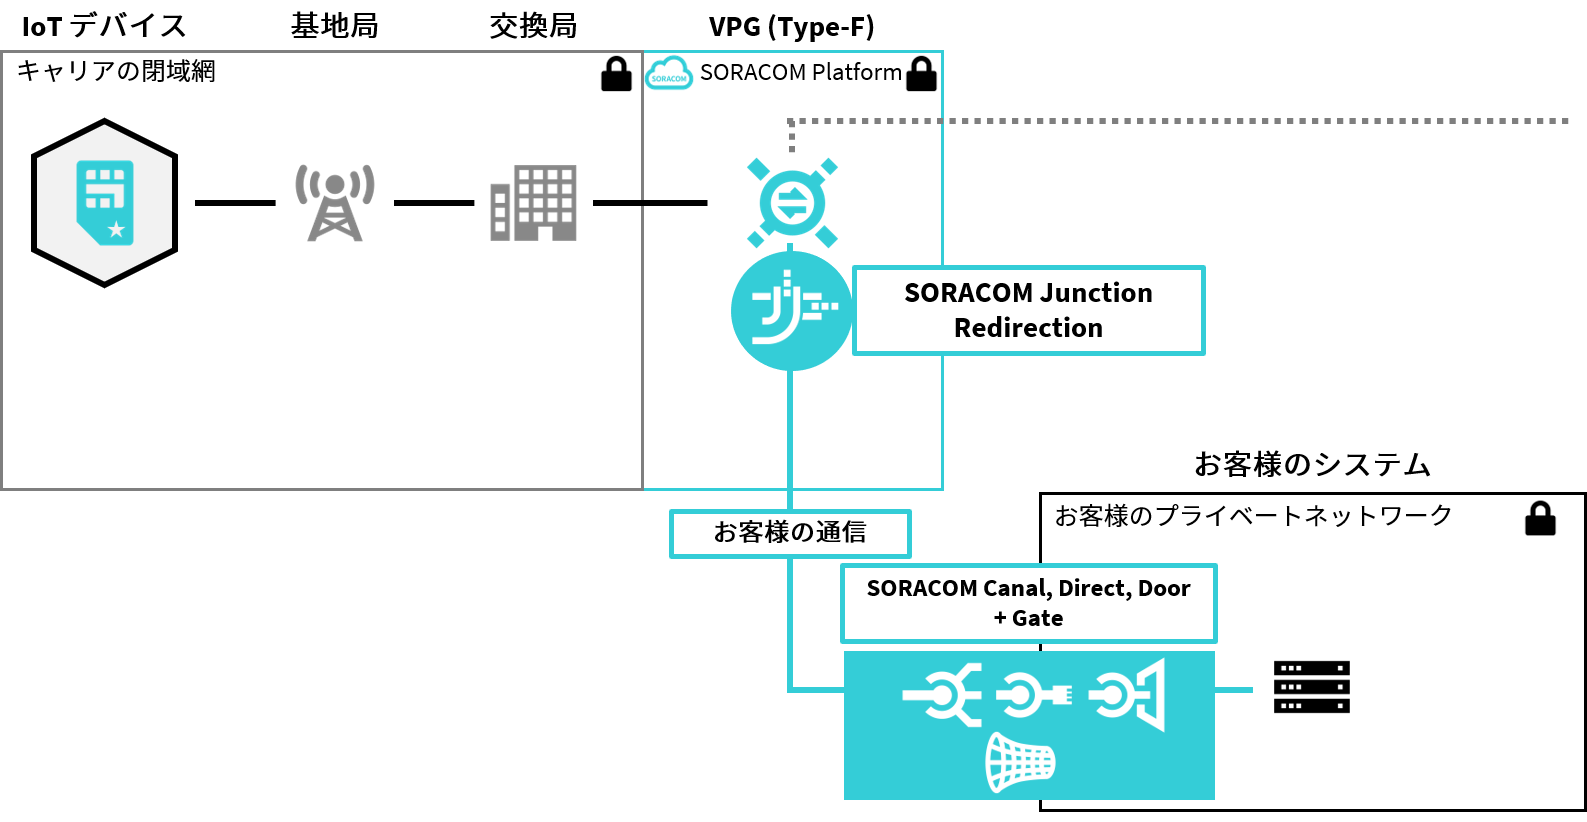 SORACOM Junction Redirection